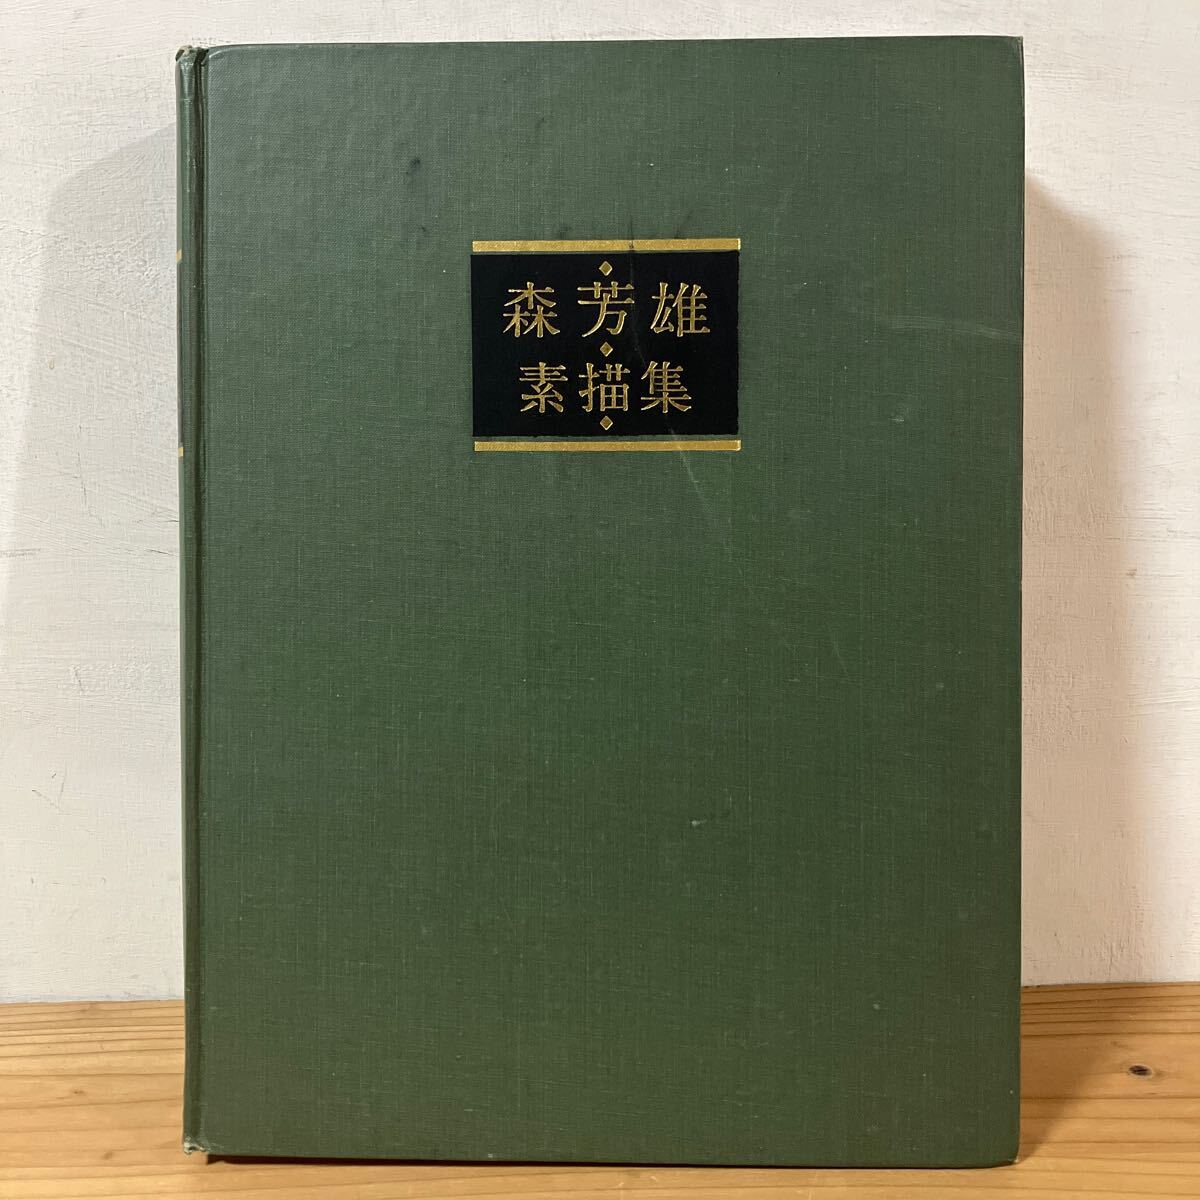 MOWO 0311 [Mori Yoshio Sketch Collection] Limitiert auf 1200 Exemplare Yayoi Gallery Katalog 1981, Malerei, Kunstbuch, Sammlung, Kunstbuch